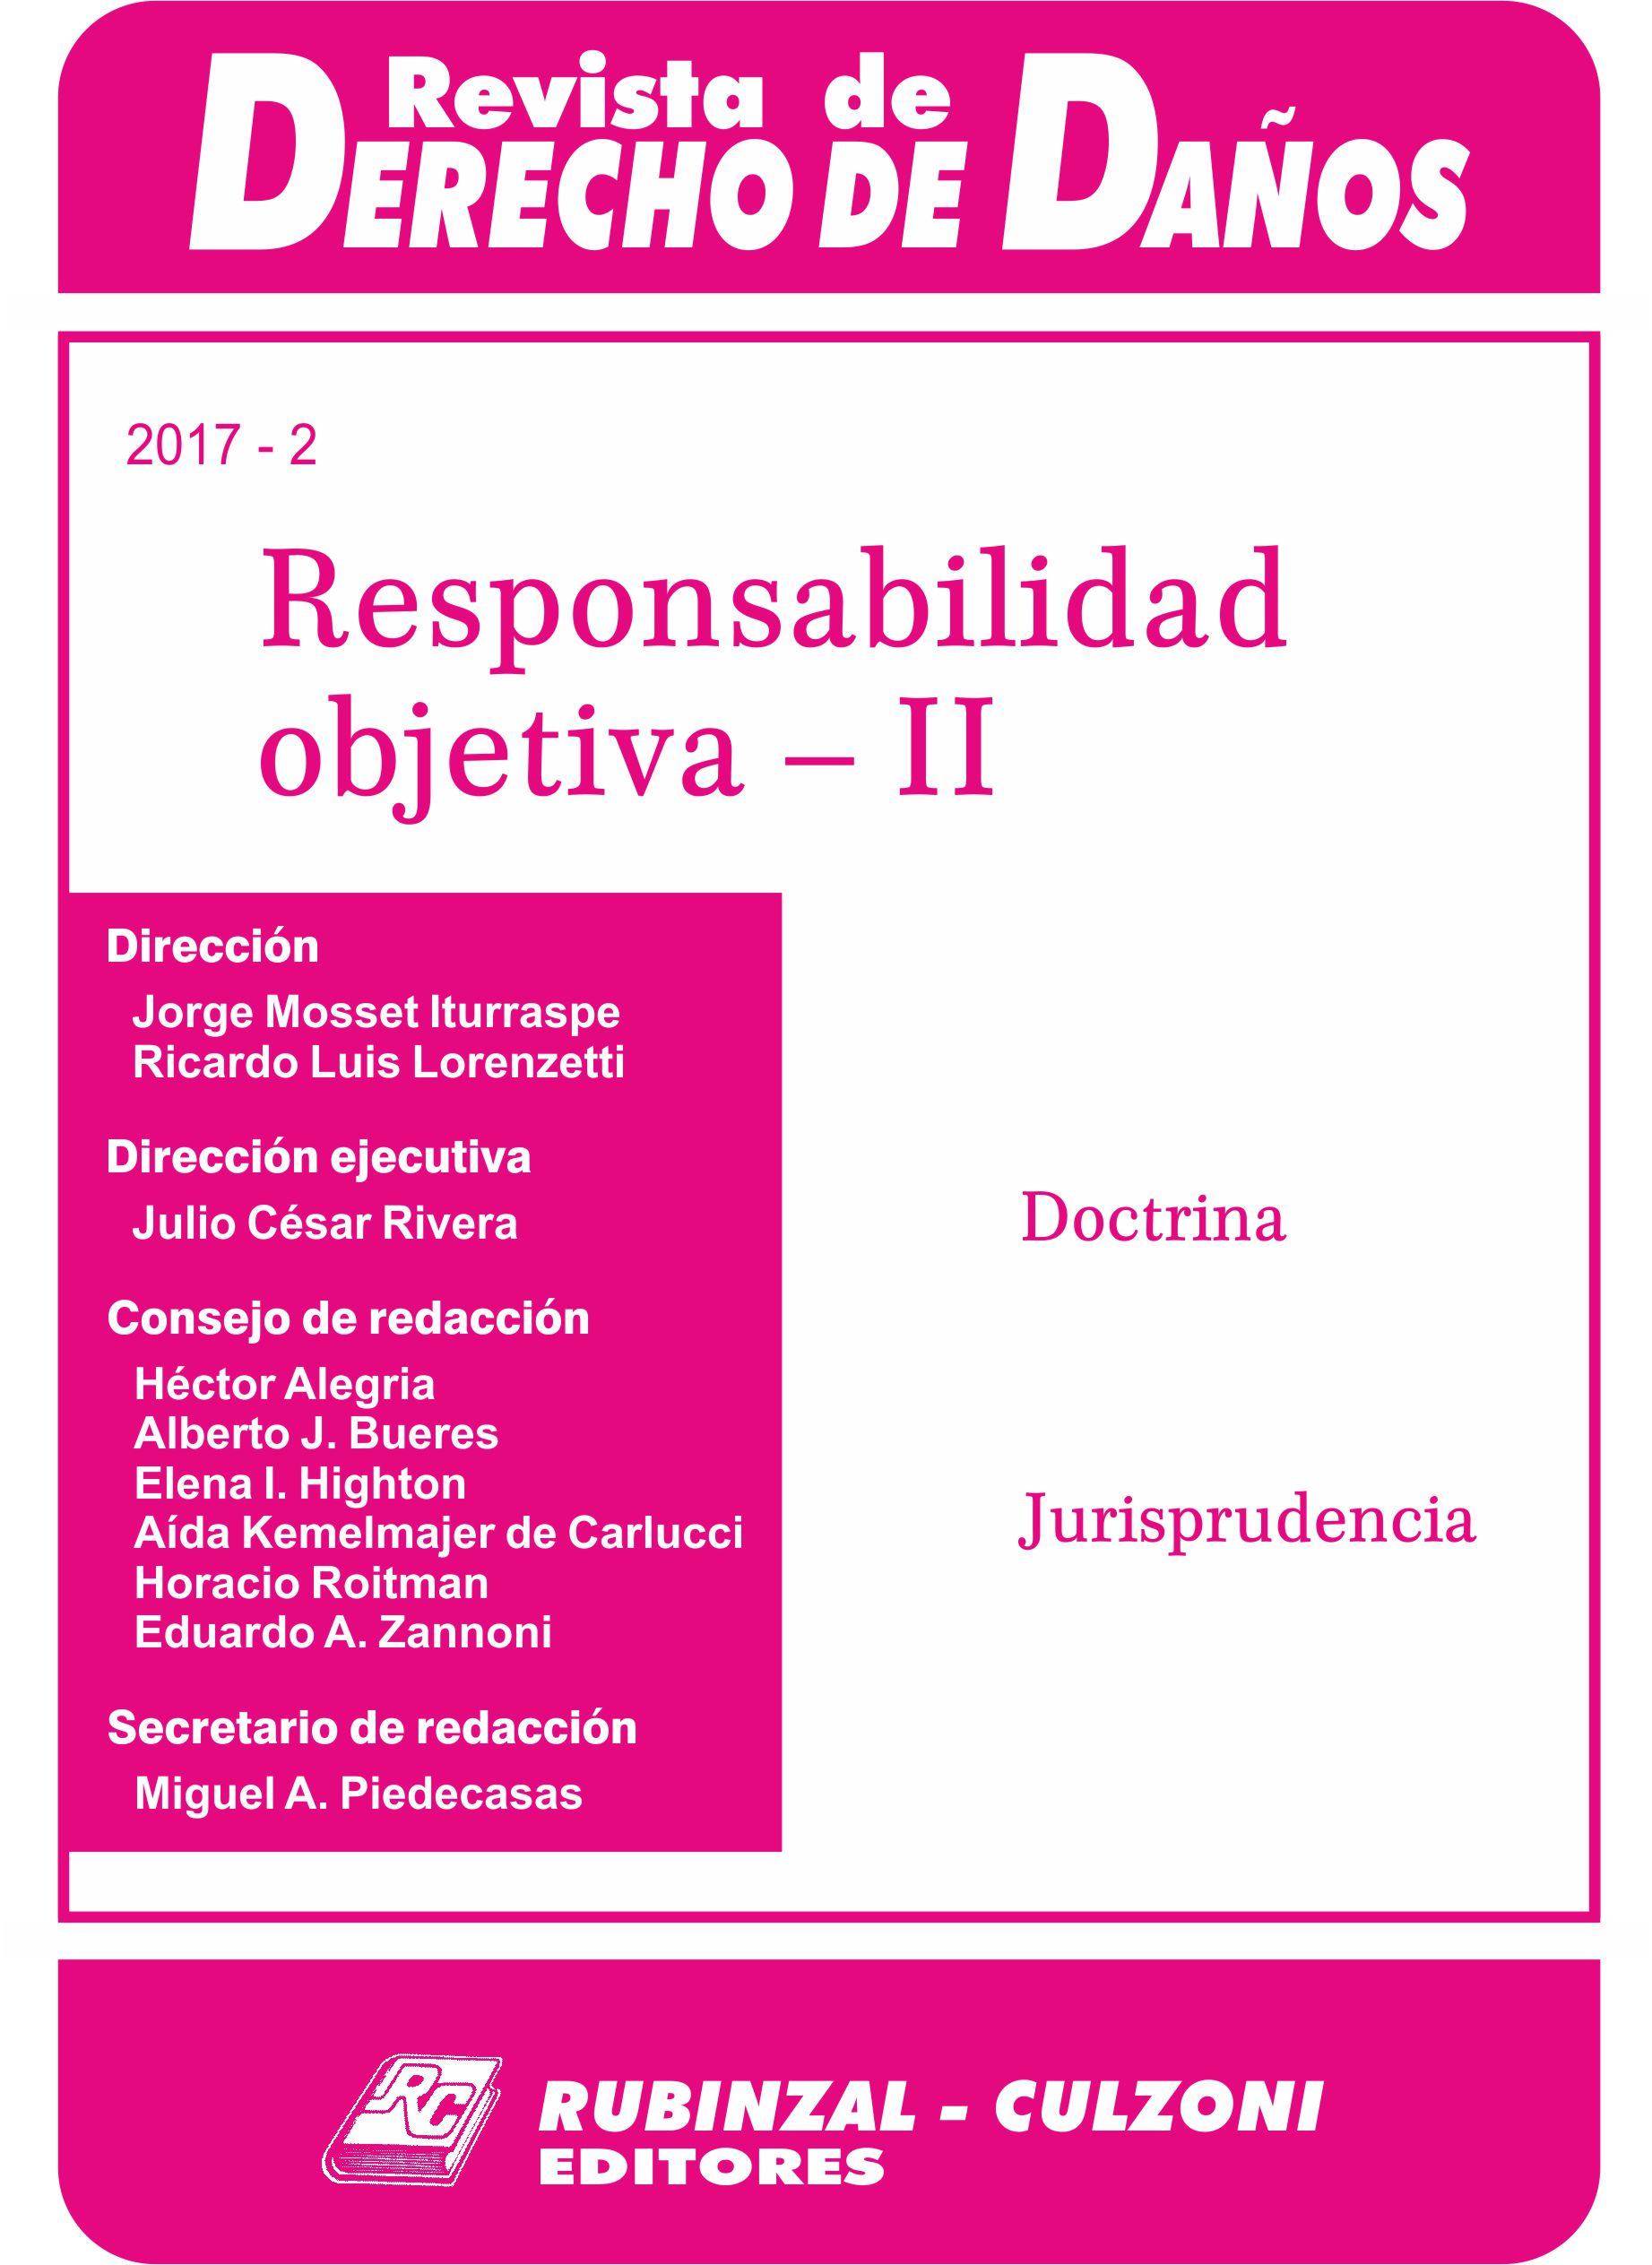 Responsabilidad objetiva - II [2017-2]